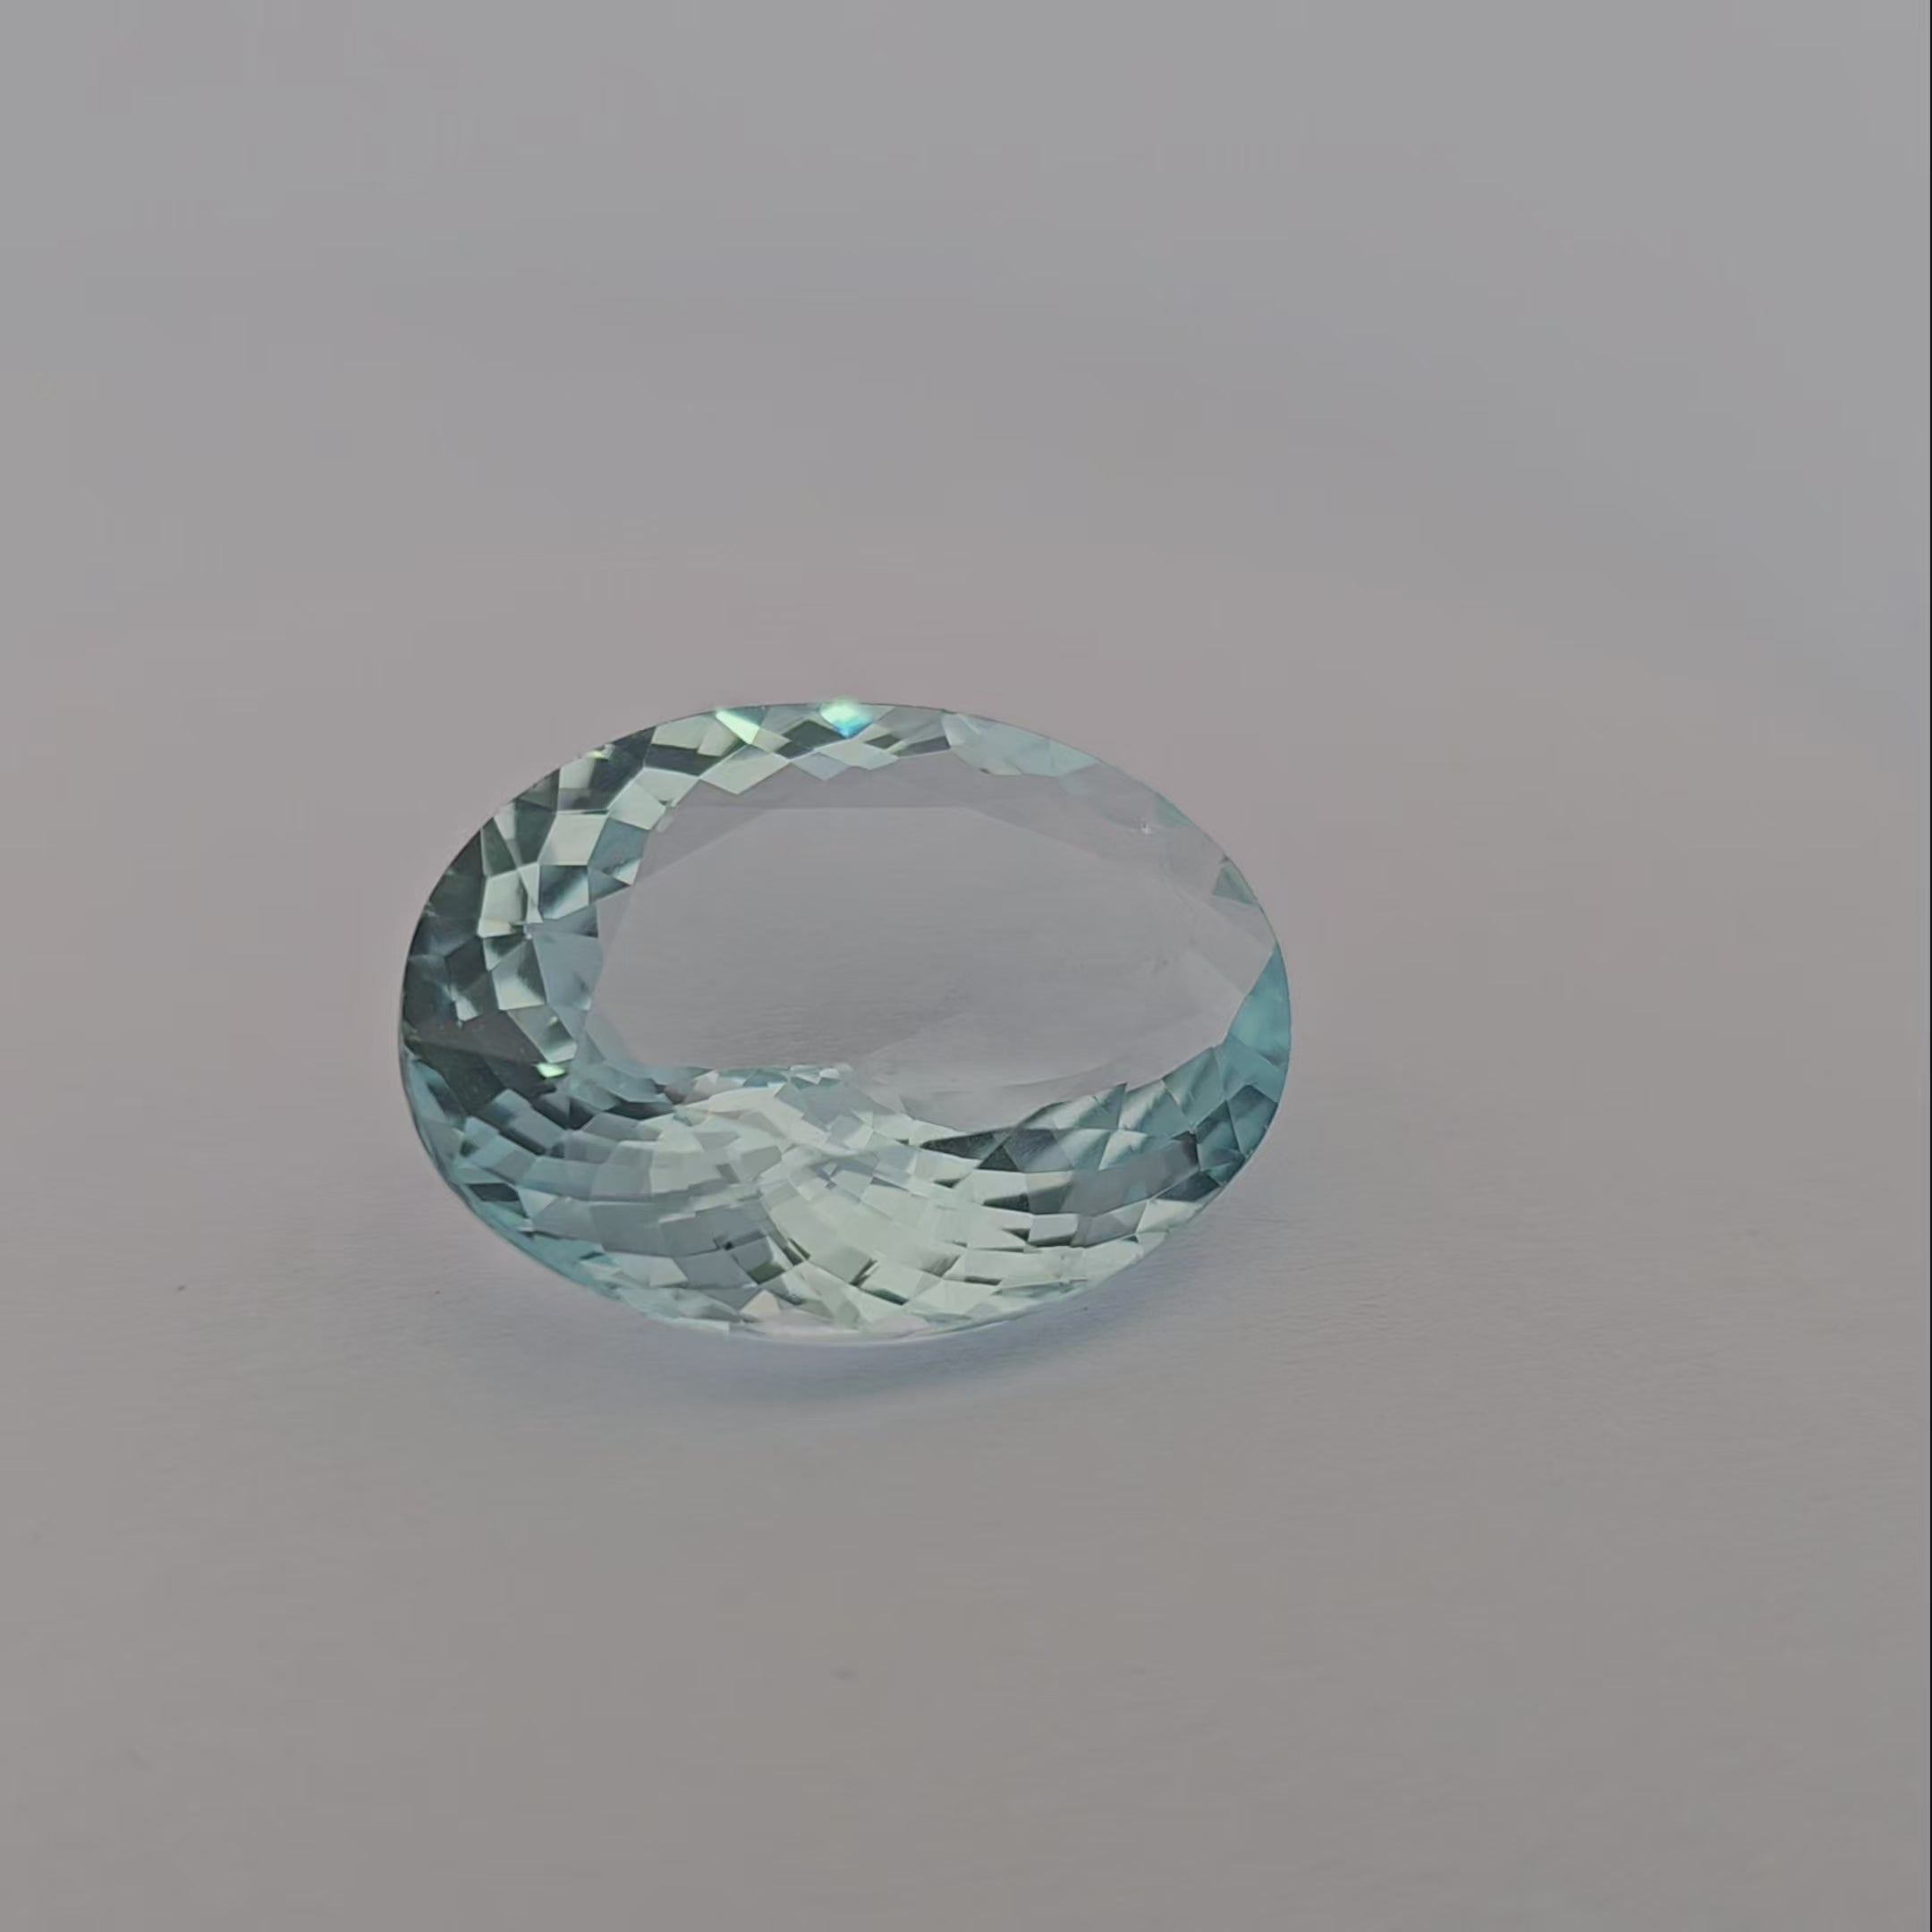 loose Natural Aquamarine Stone 27.81 Carats Oval Shape 20.5 x 16.7 mm